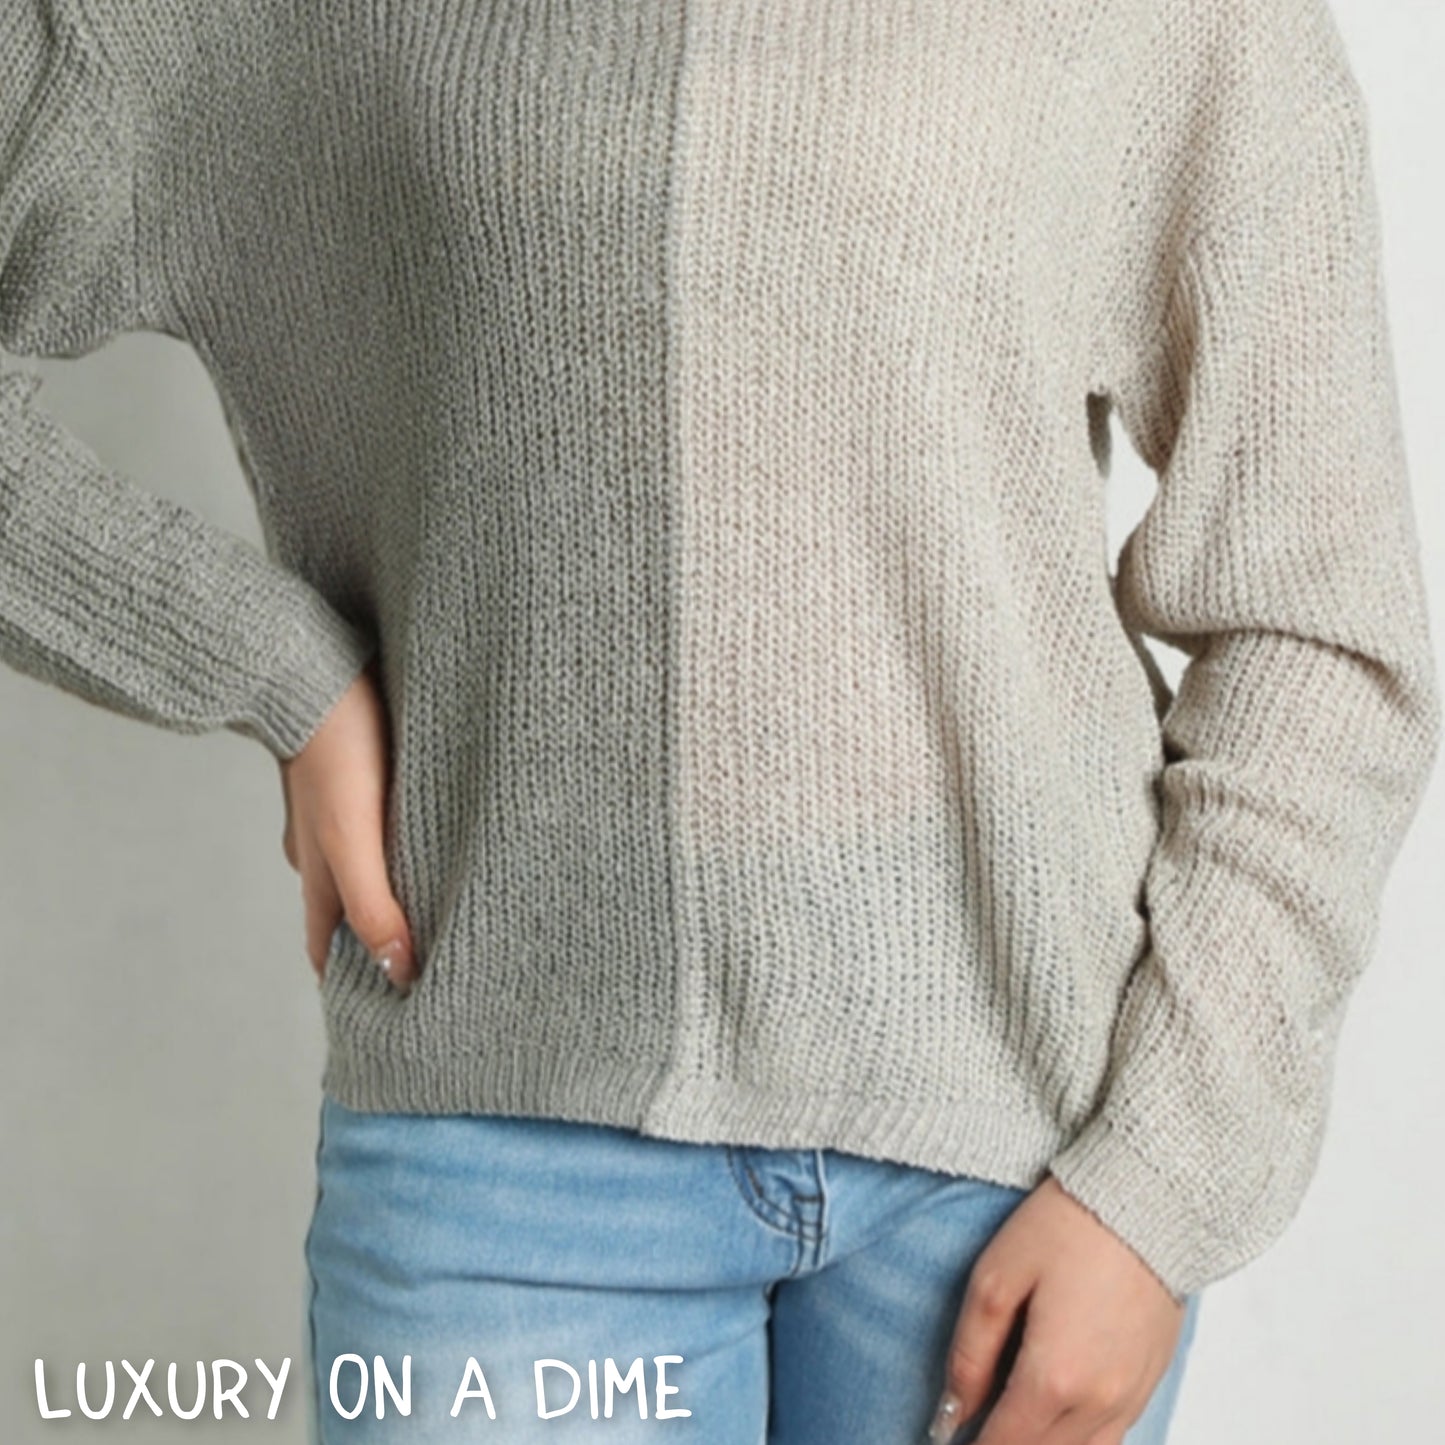 Color Block Contrast V-Neck Lightweight Pullover Knit Sweater